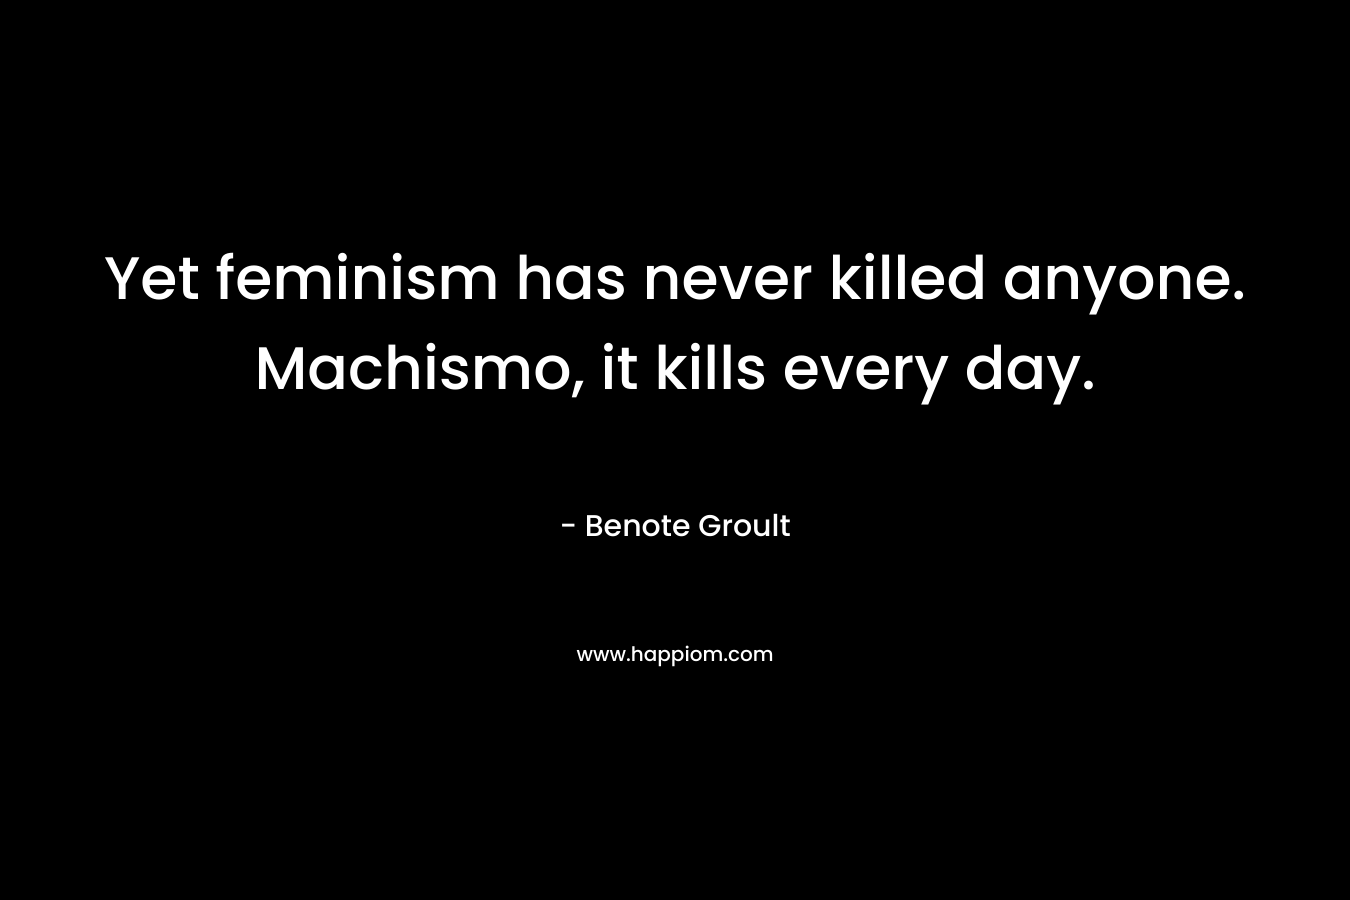 Yet feminism has never killed anyone. Machismo, it kills every day.